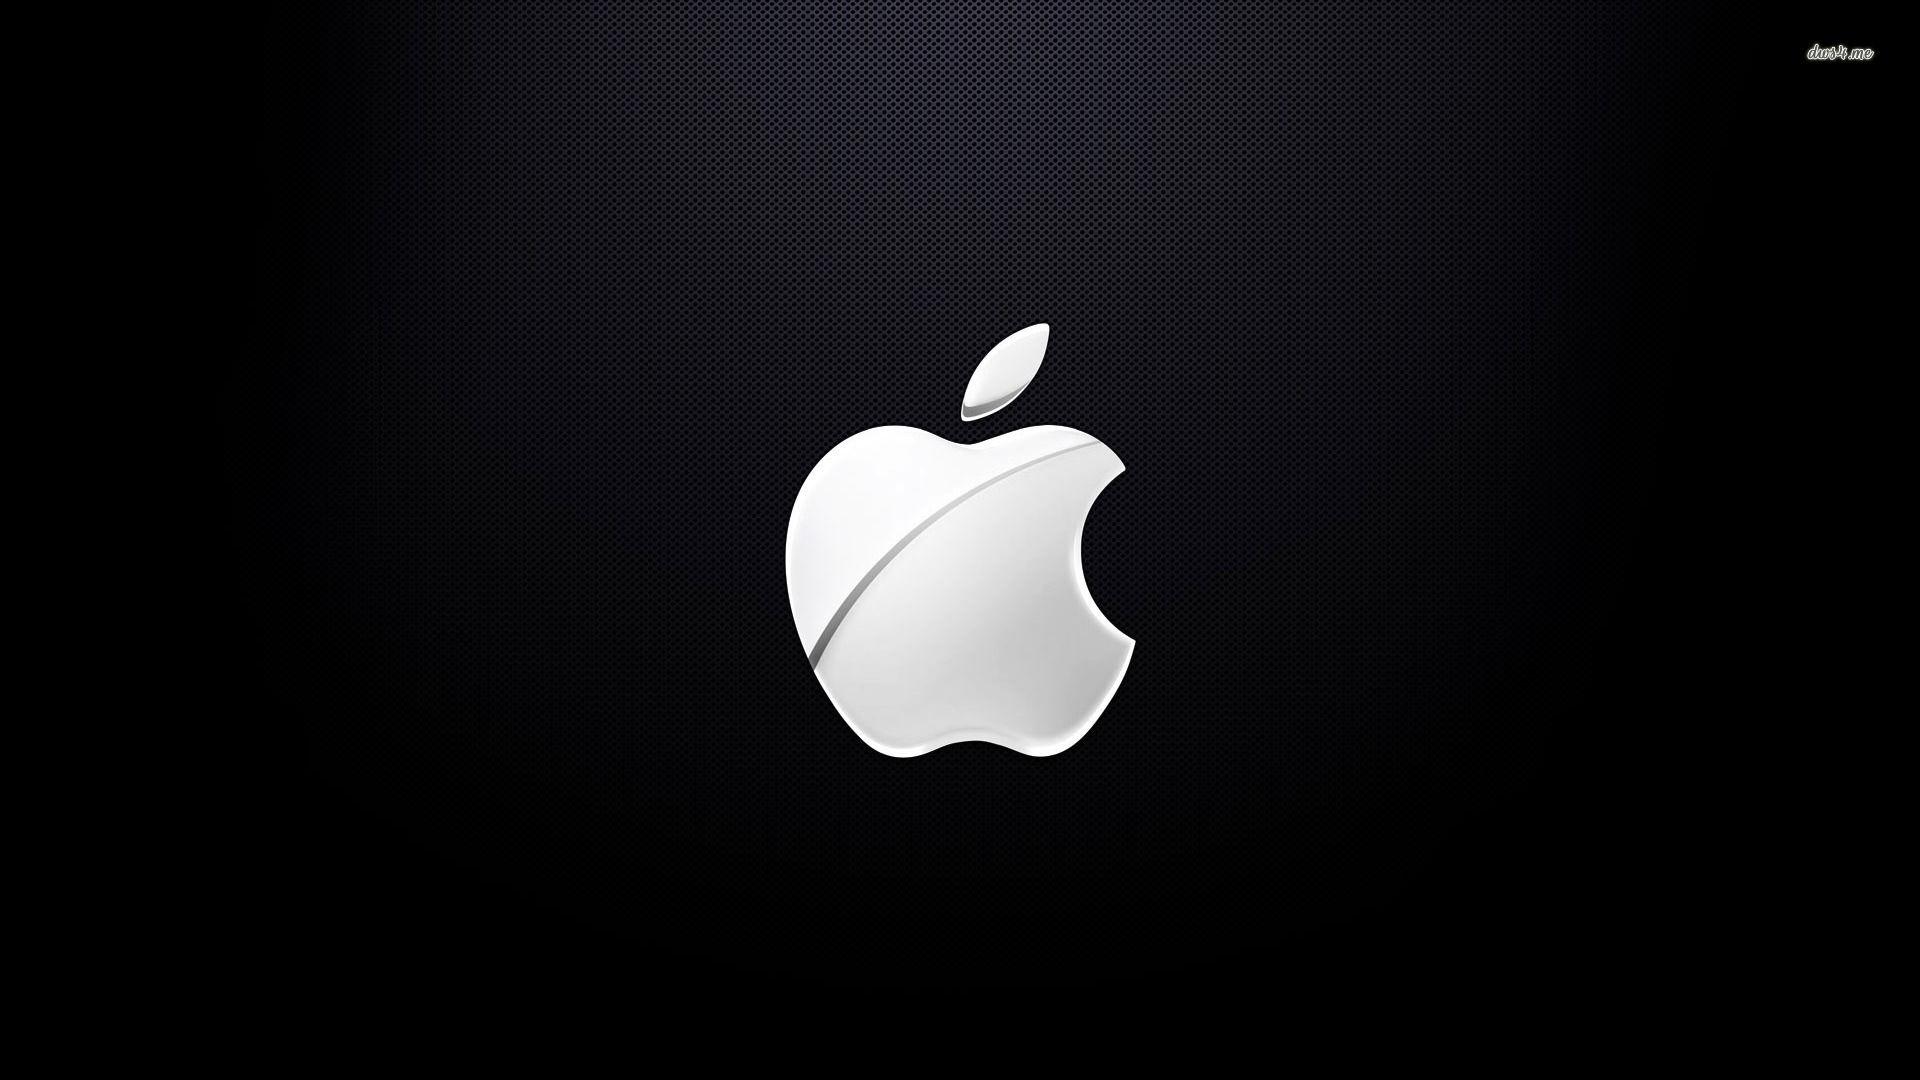 download apple logo wallpaper Gallery